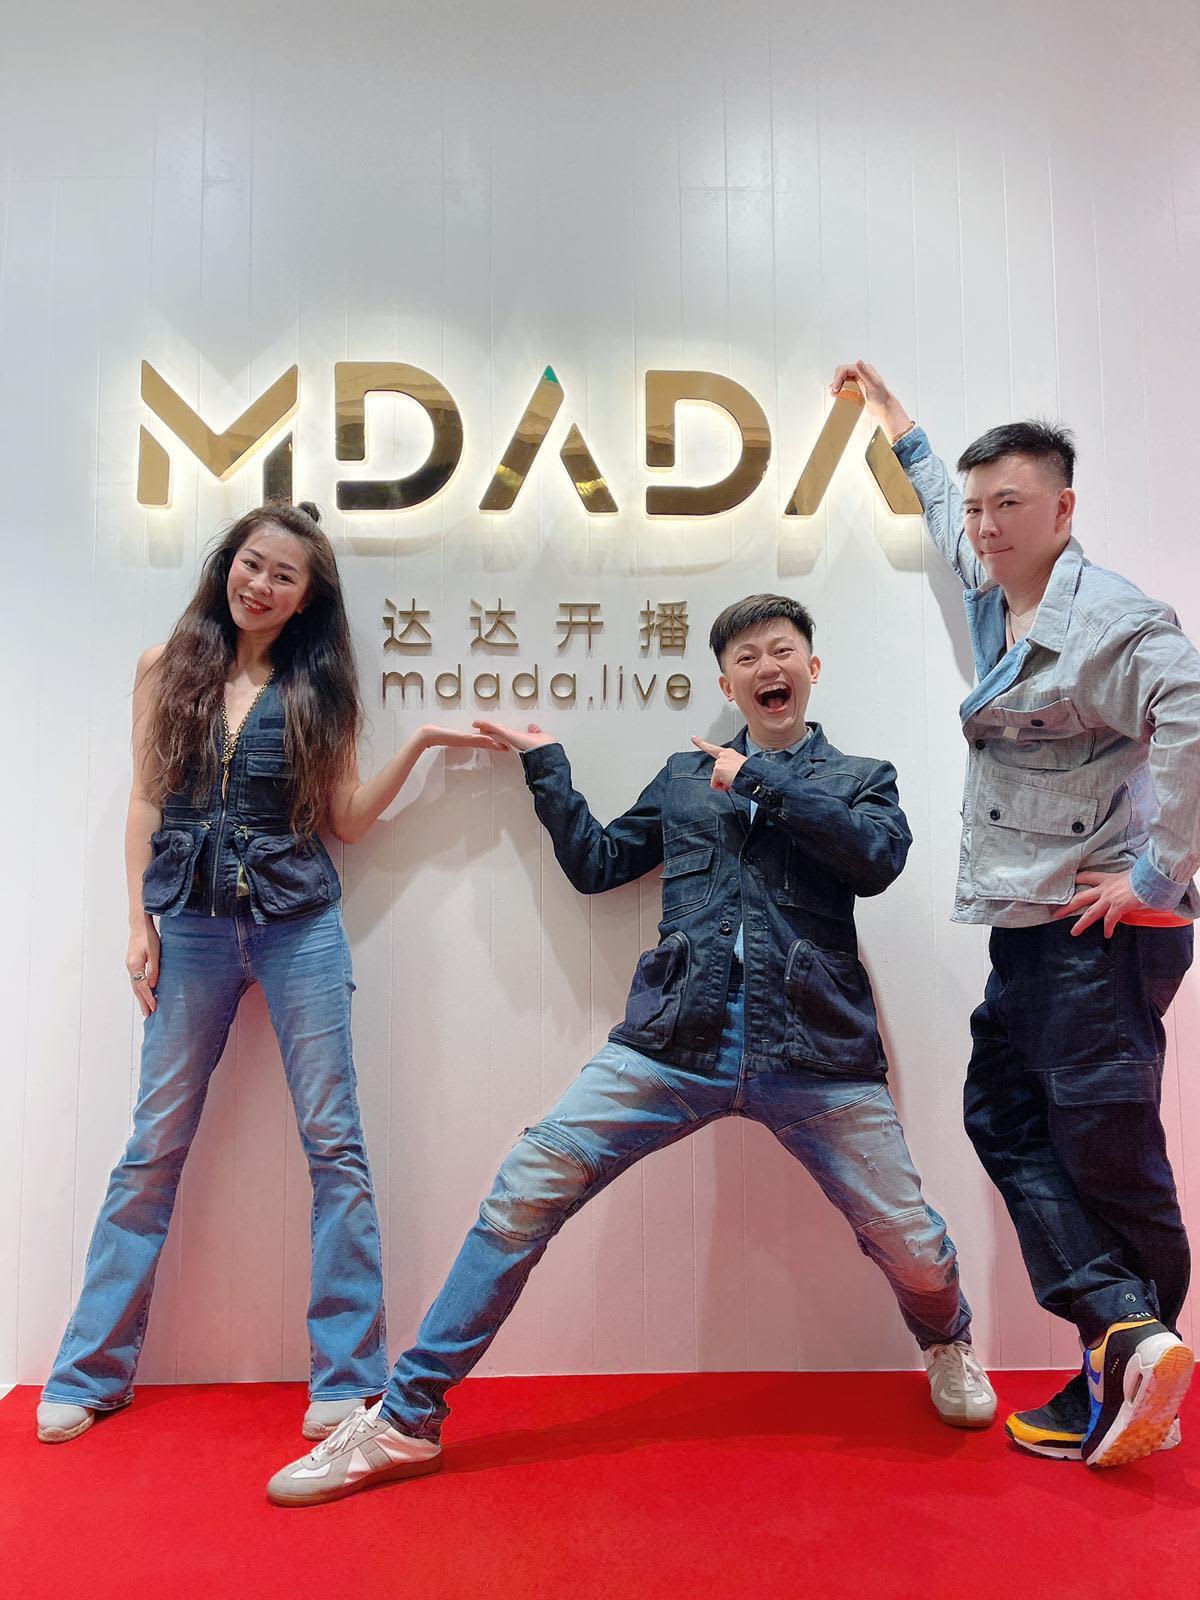 Singapore start-up Mdada had $3 million in sales in 2 months on Facebook